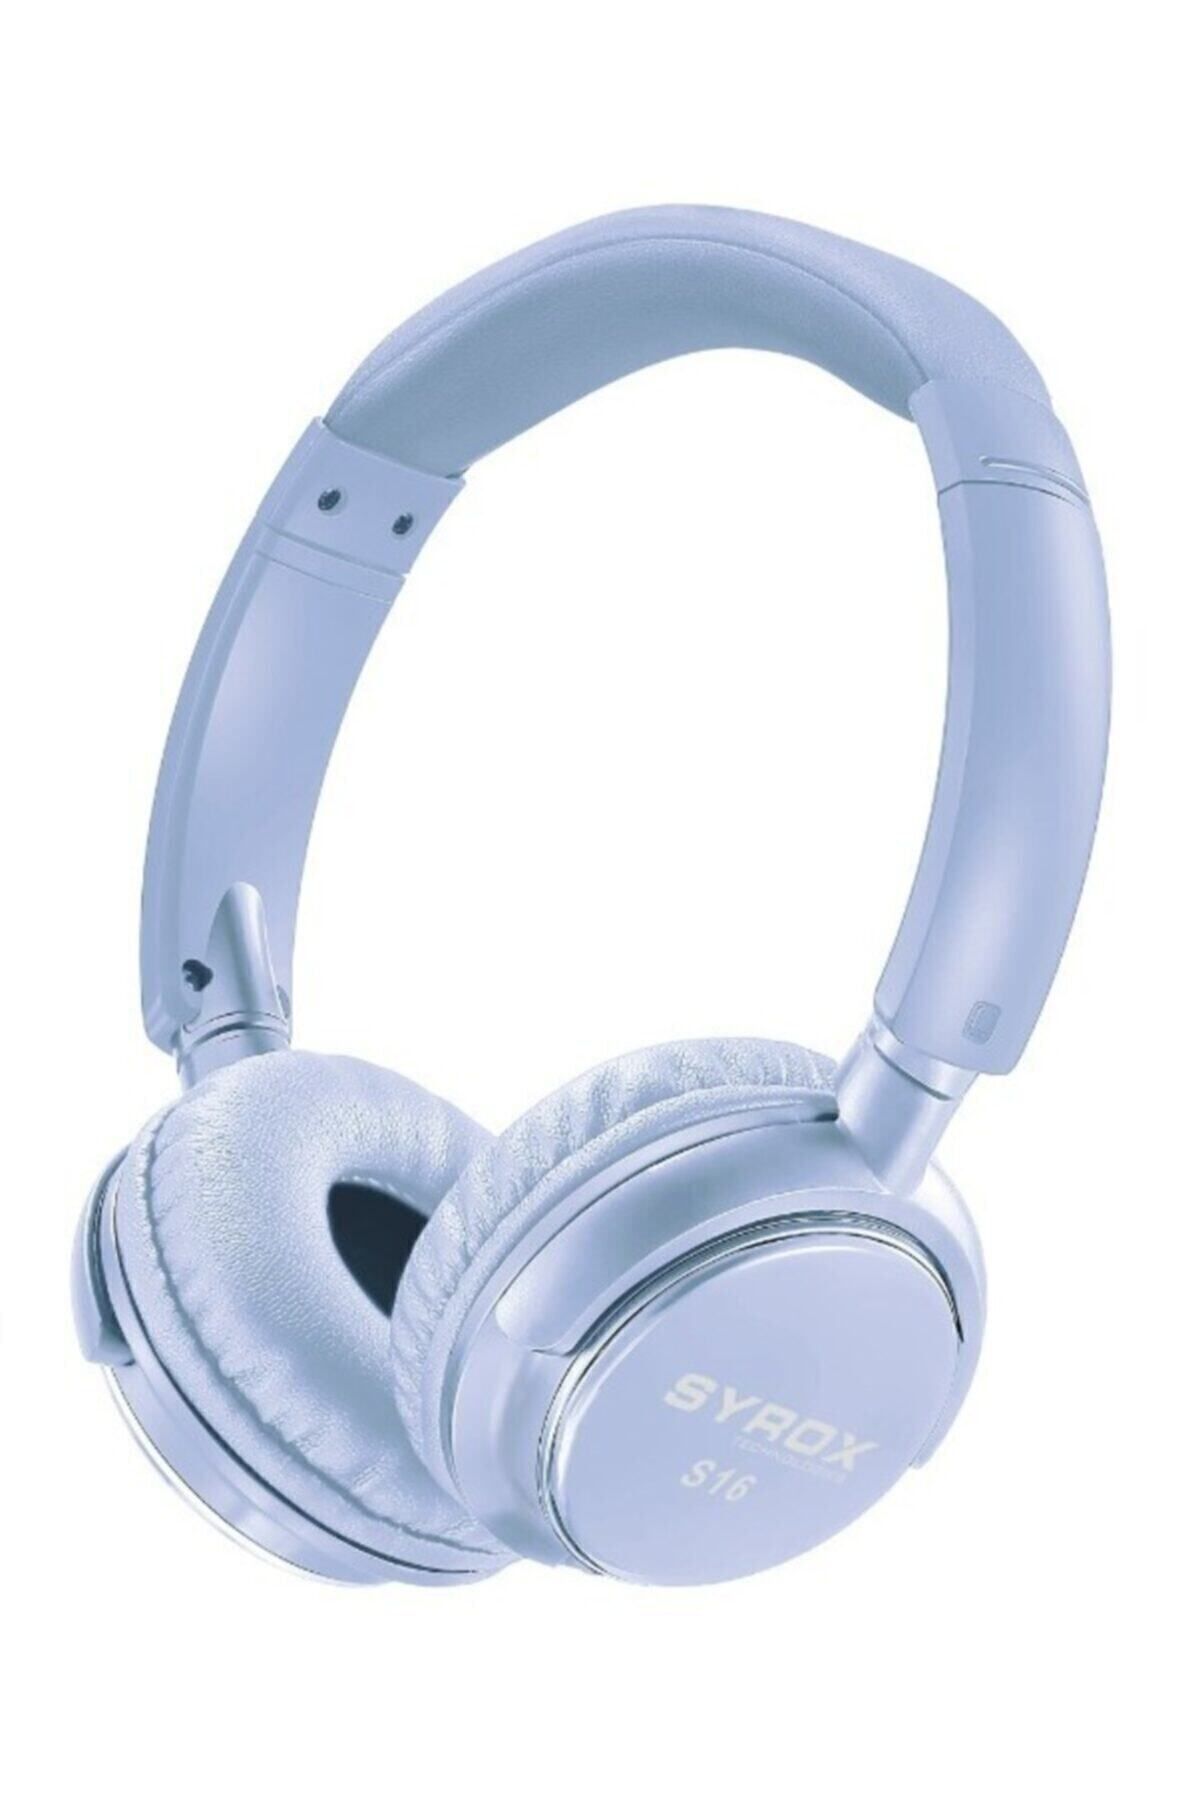 Syrox Sayrox Kablosuz Bluetooth Kulak Üstü Kulaklık S16 - Mavi Renk